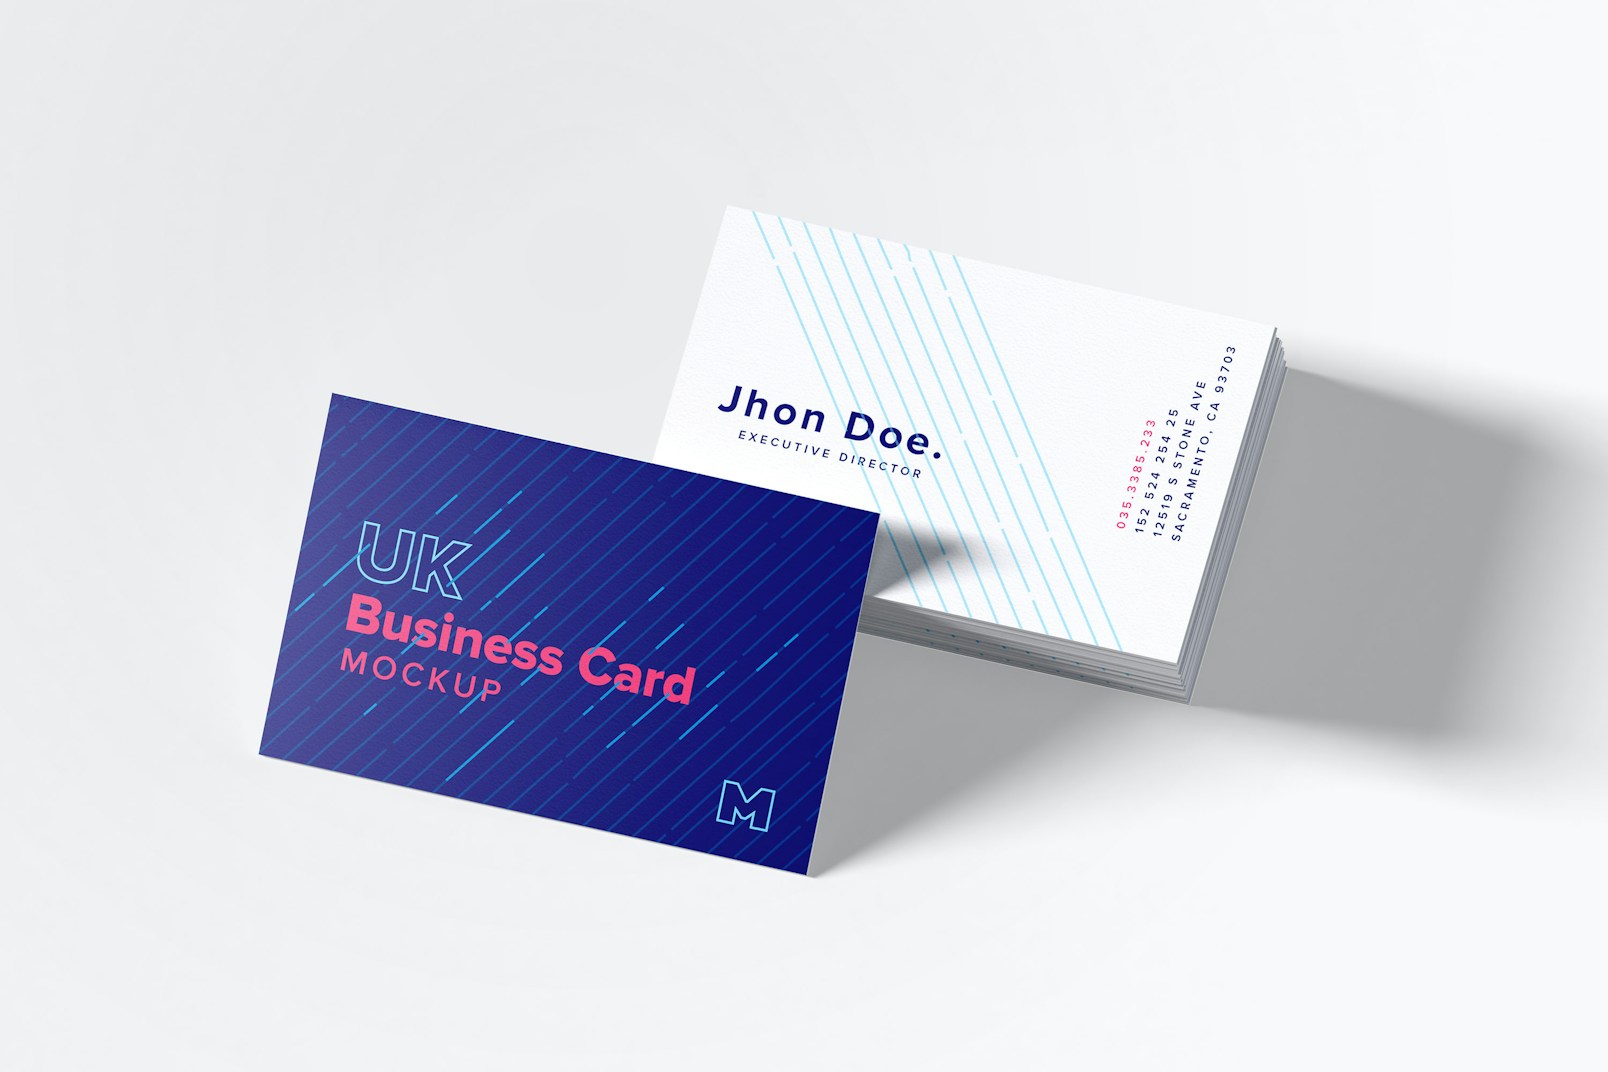 UK Business Cards Mockup 06